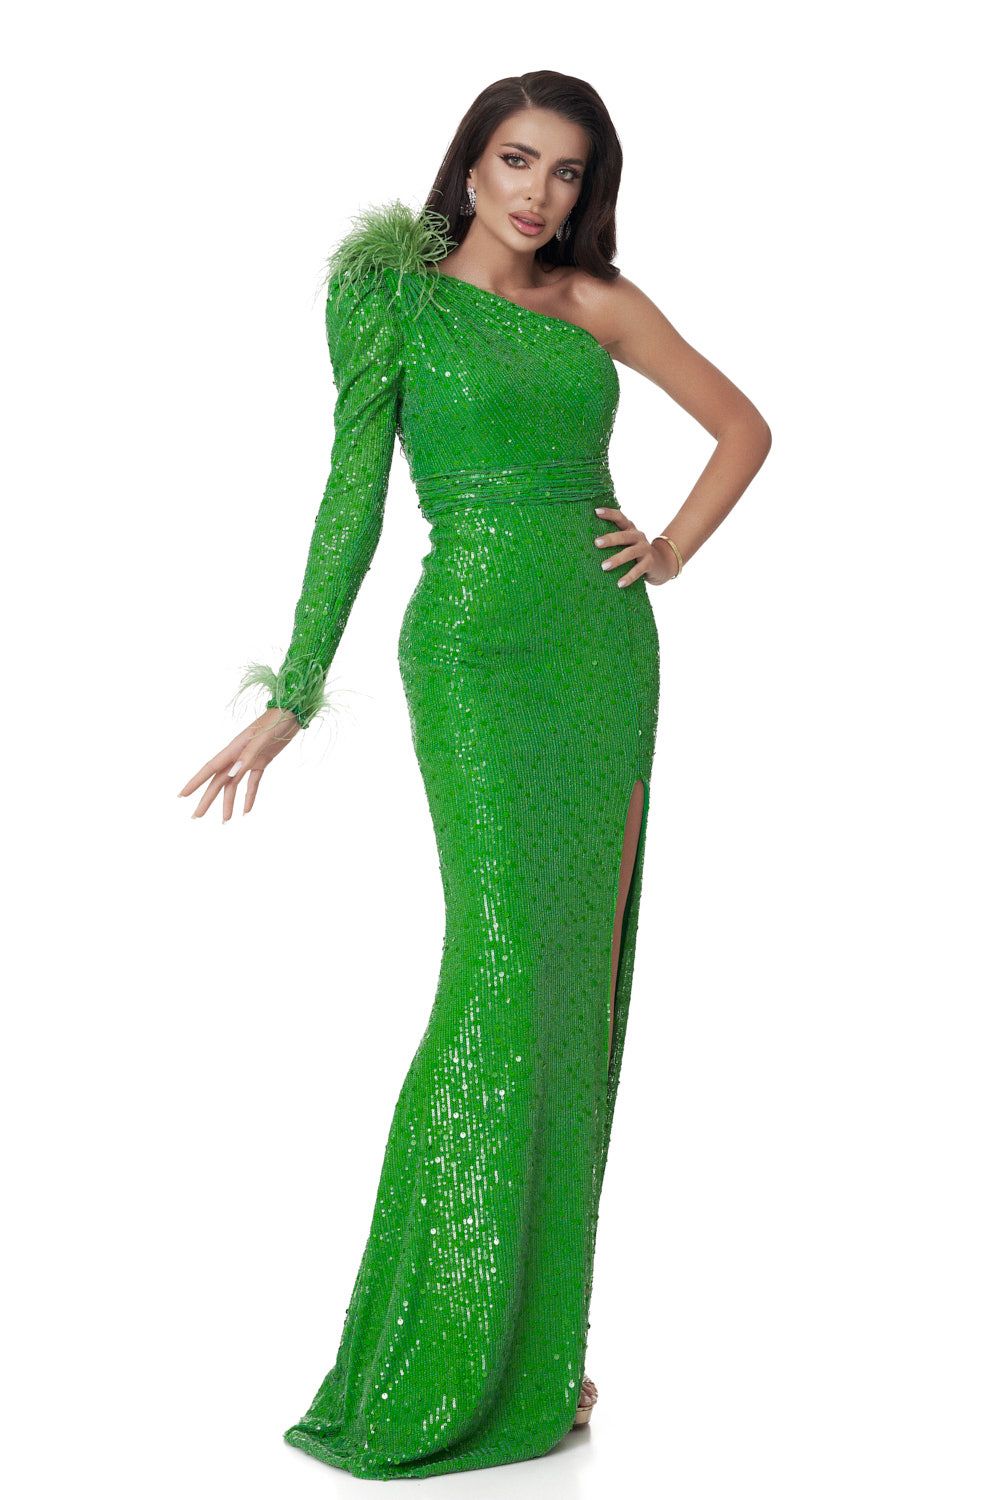 Long green sequin dress for women Adosinda Bogas